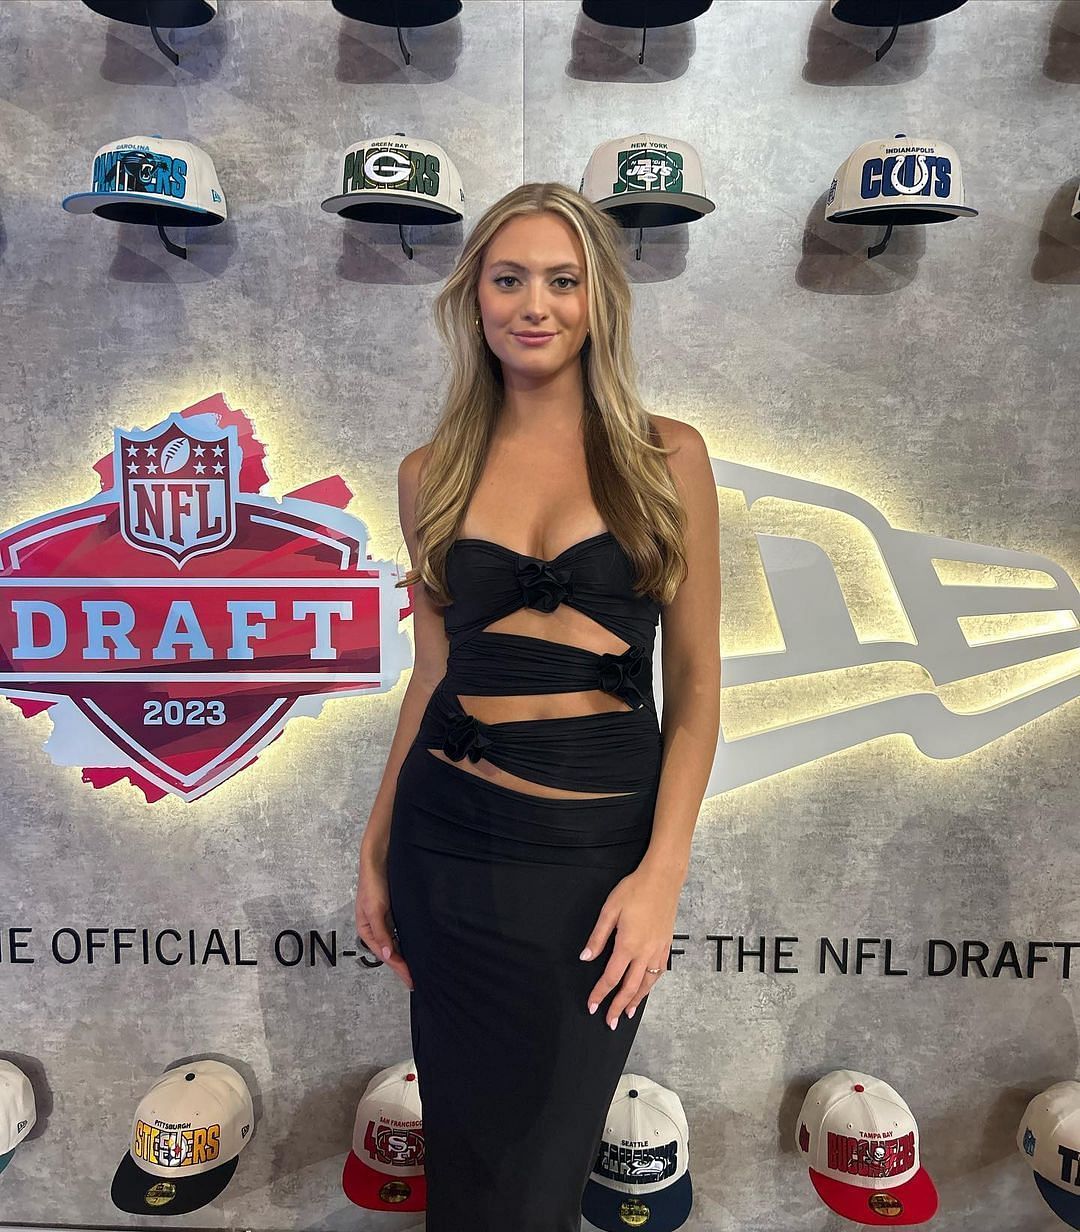 Kelley Levis, at the 2023 NFL Draft (Image credit: Instagram.com/kelleylevis)